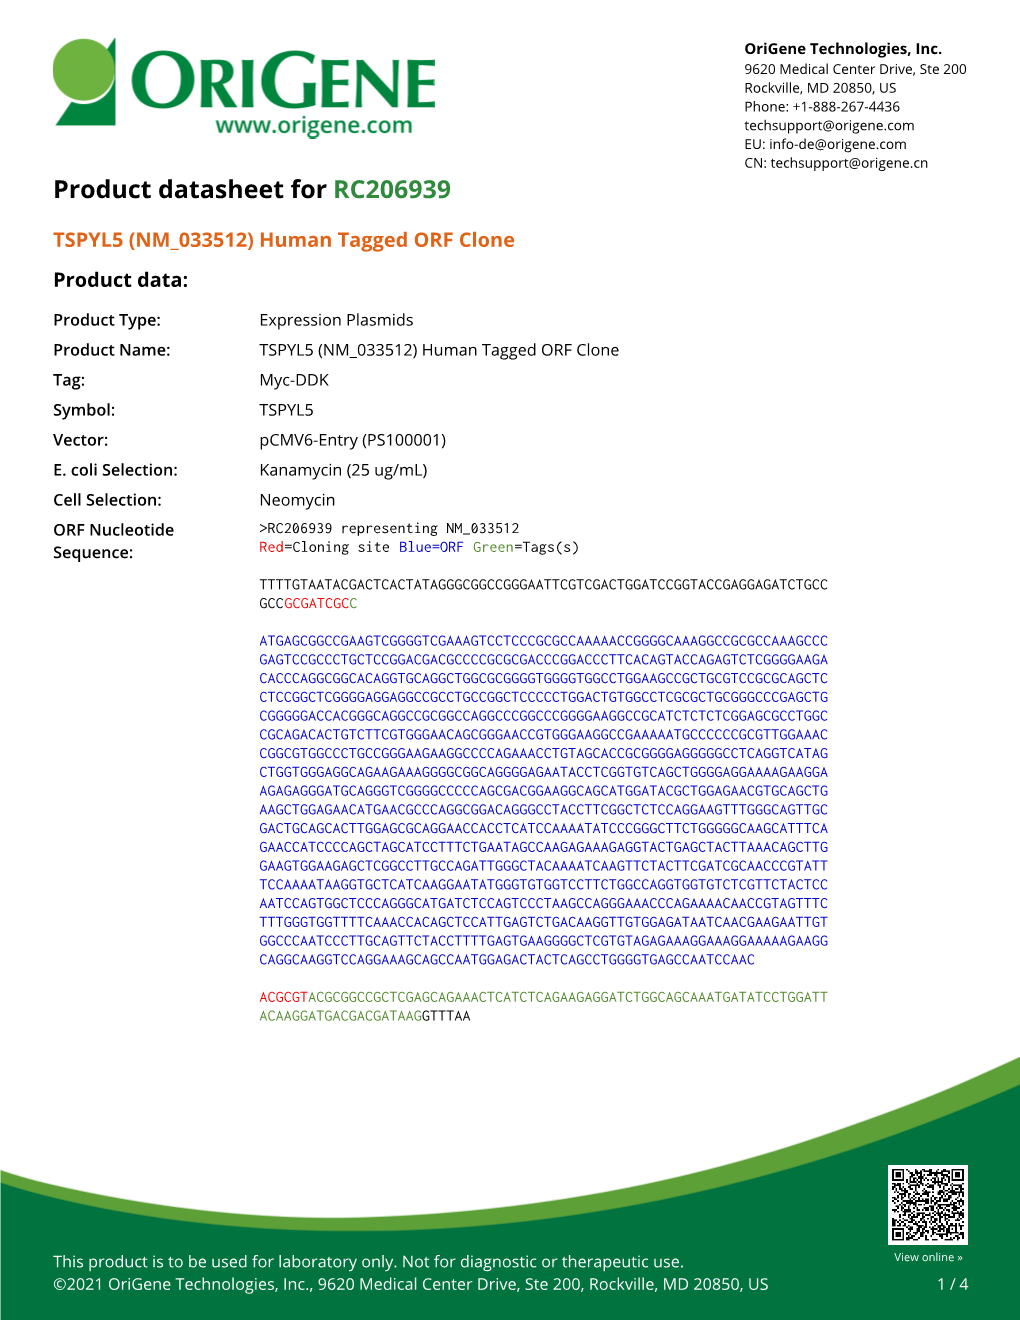 TSPYL5 (NM 033512) Human Tagged ORF Clone Product Data